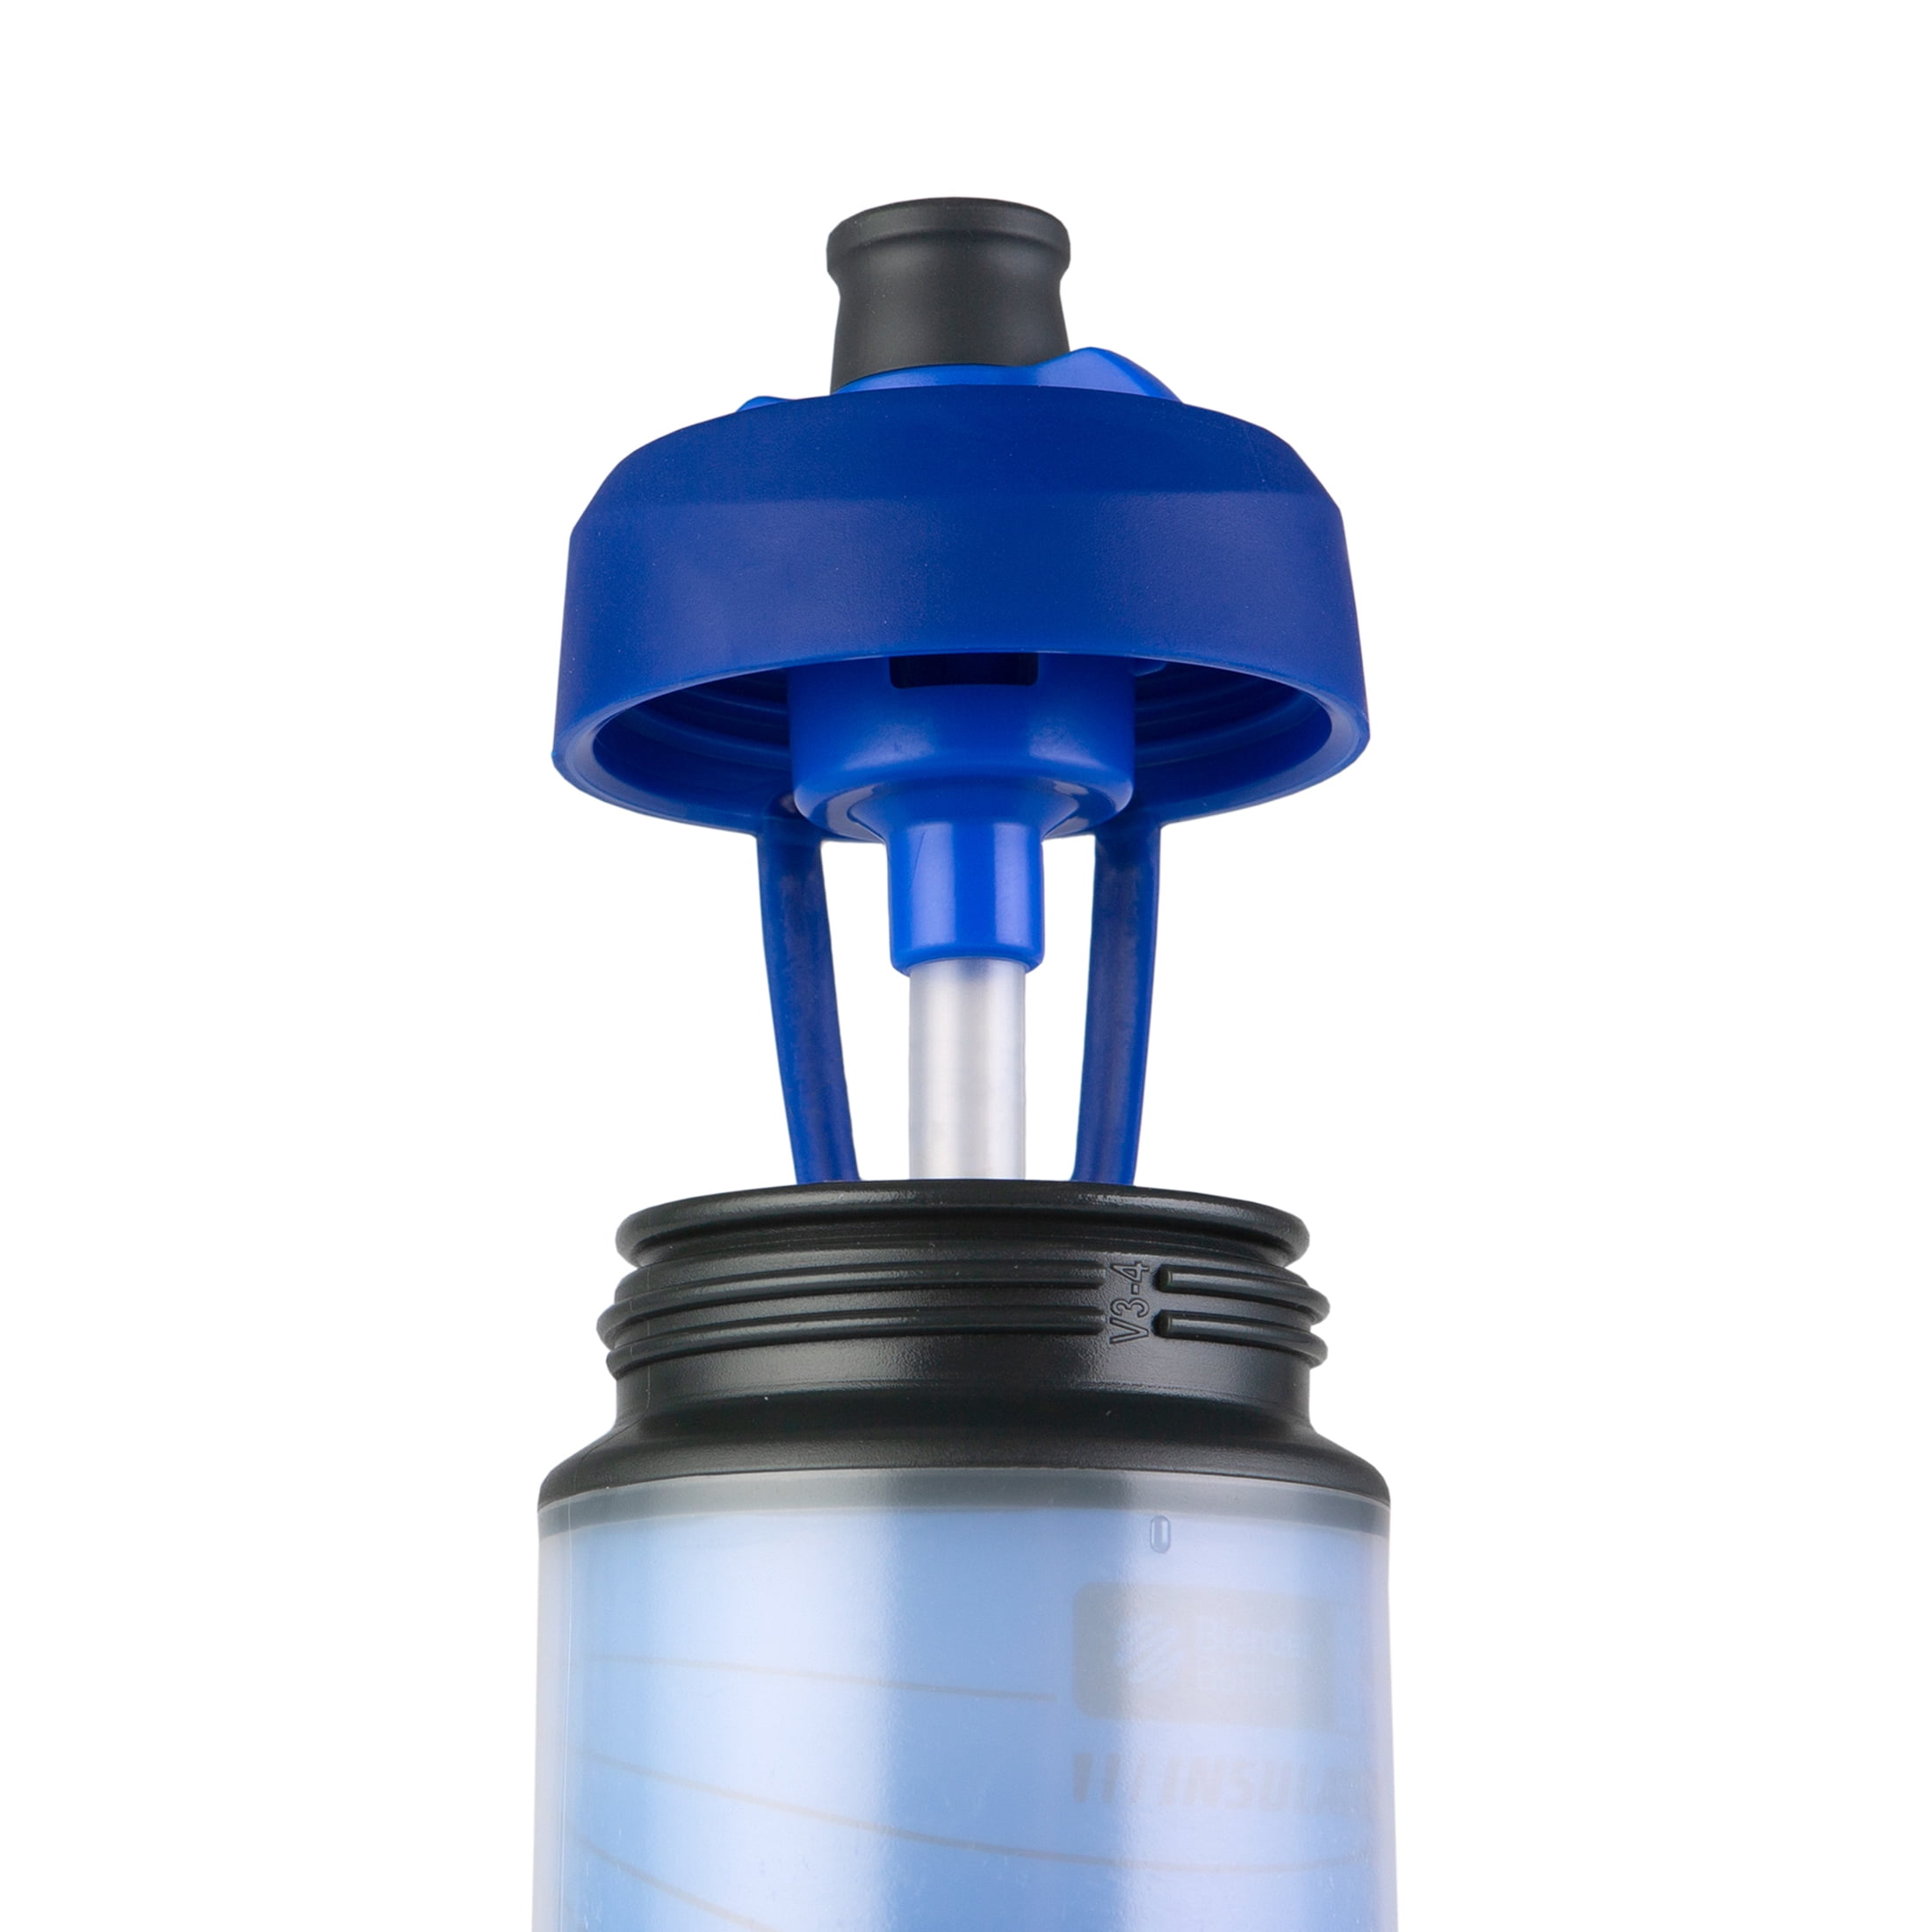 Blender Bottle Halex 24 oz. Insulated Squeeze Bike Water Bottle -  UltraViolet